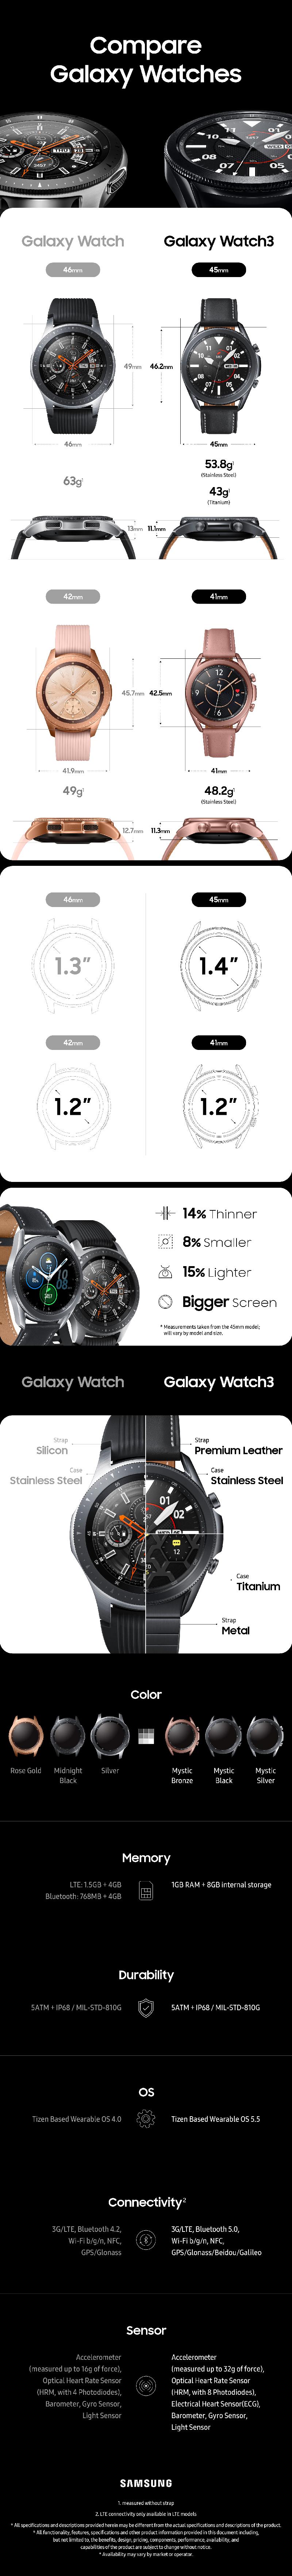 Galaxy-Watch-vs-Watch3-Spec-Comparison-Infographic_main-3.jpg